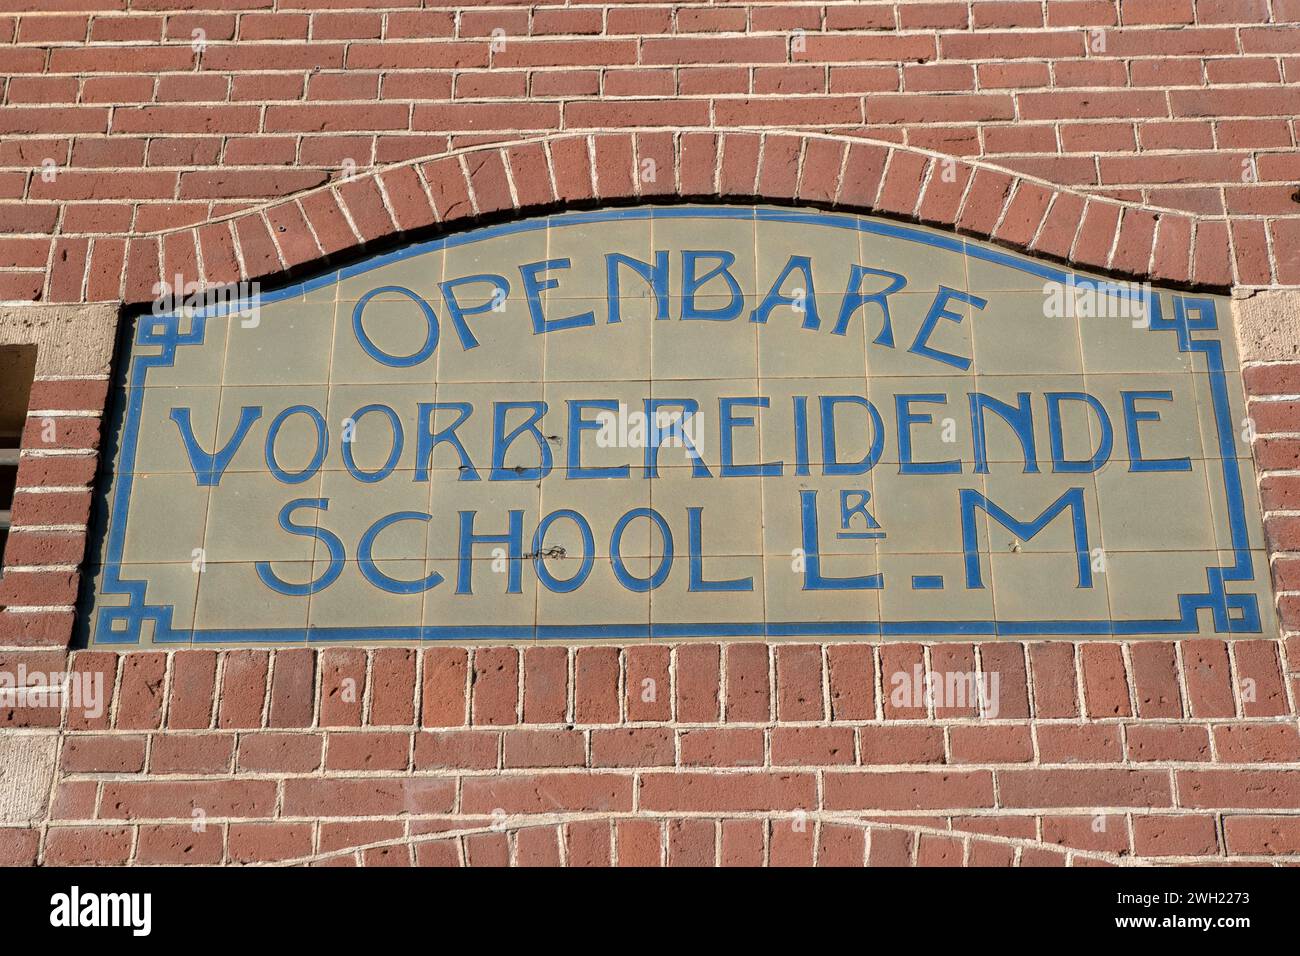 Facade Stone Openbare Voorbereidende School LrM At Amsterdam The Netherlands 26-1-2023 Stock Photo